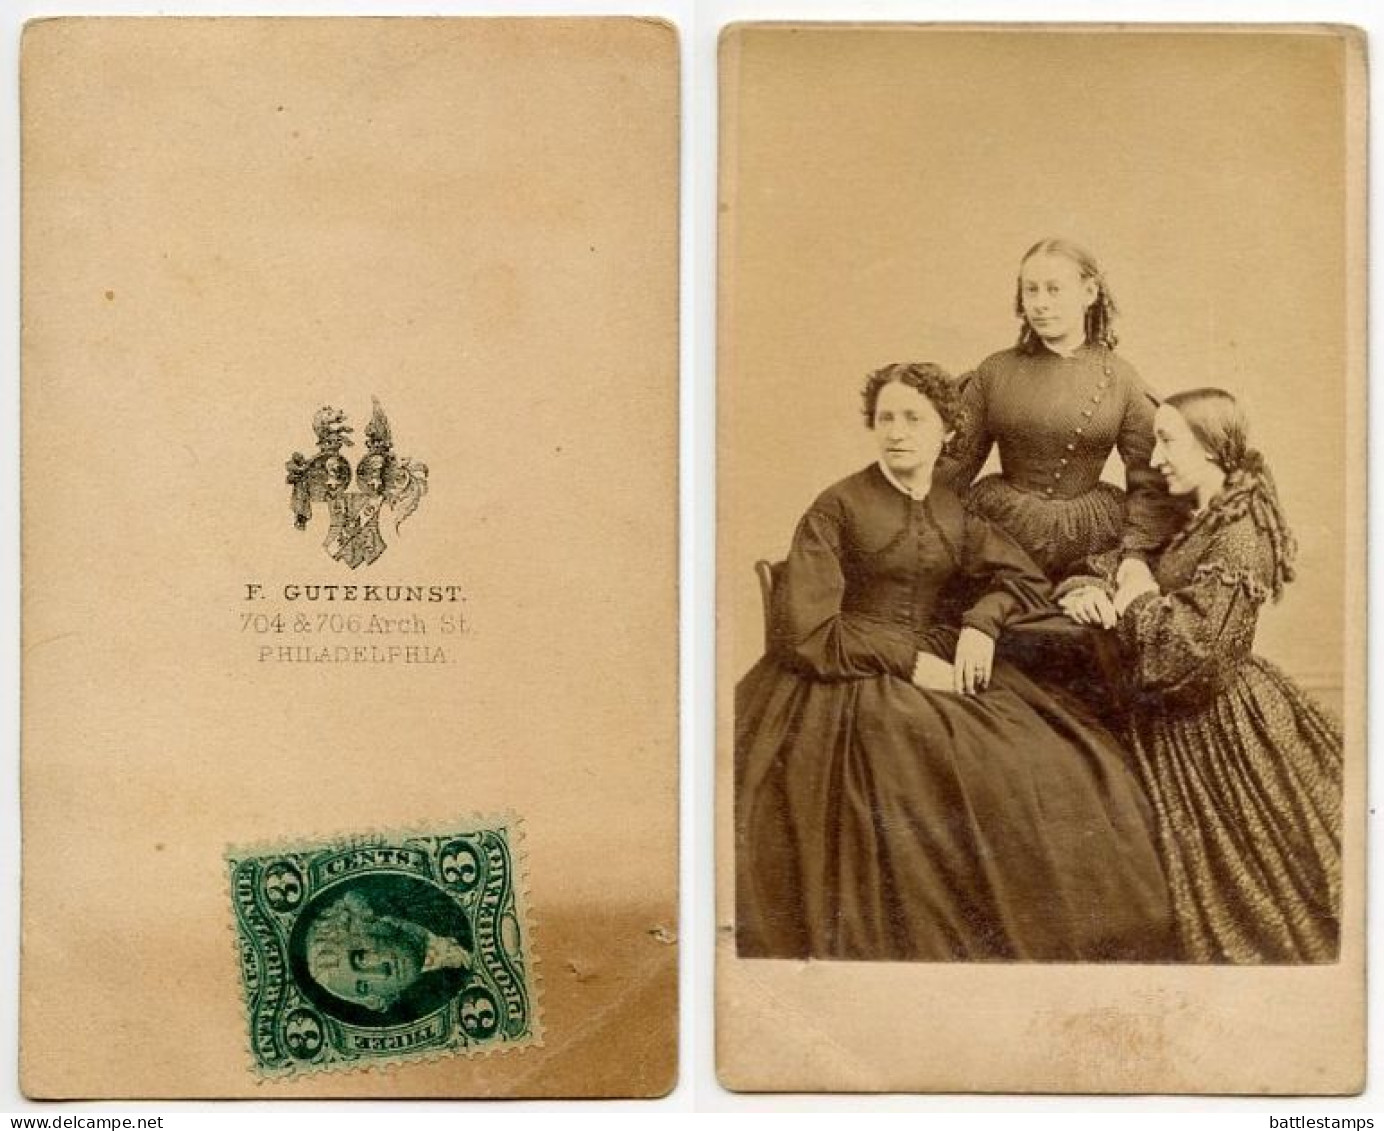 United States 1860‘s Photograph, Three Women - F. Gutekun St., Philadelphia Pennsylvania, Scott R18c Revenue Stamp - Steuermarken